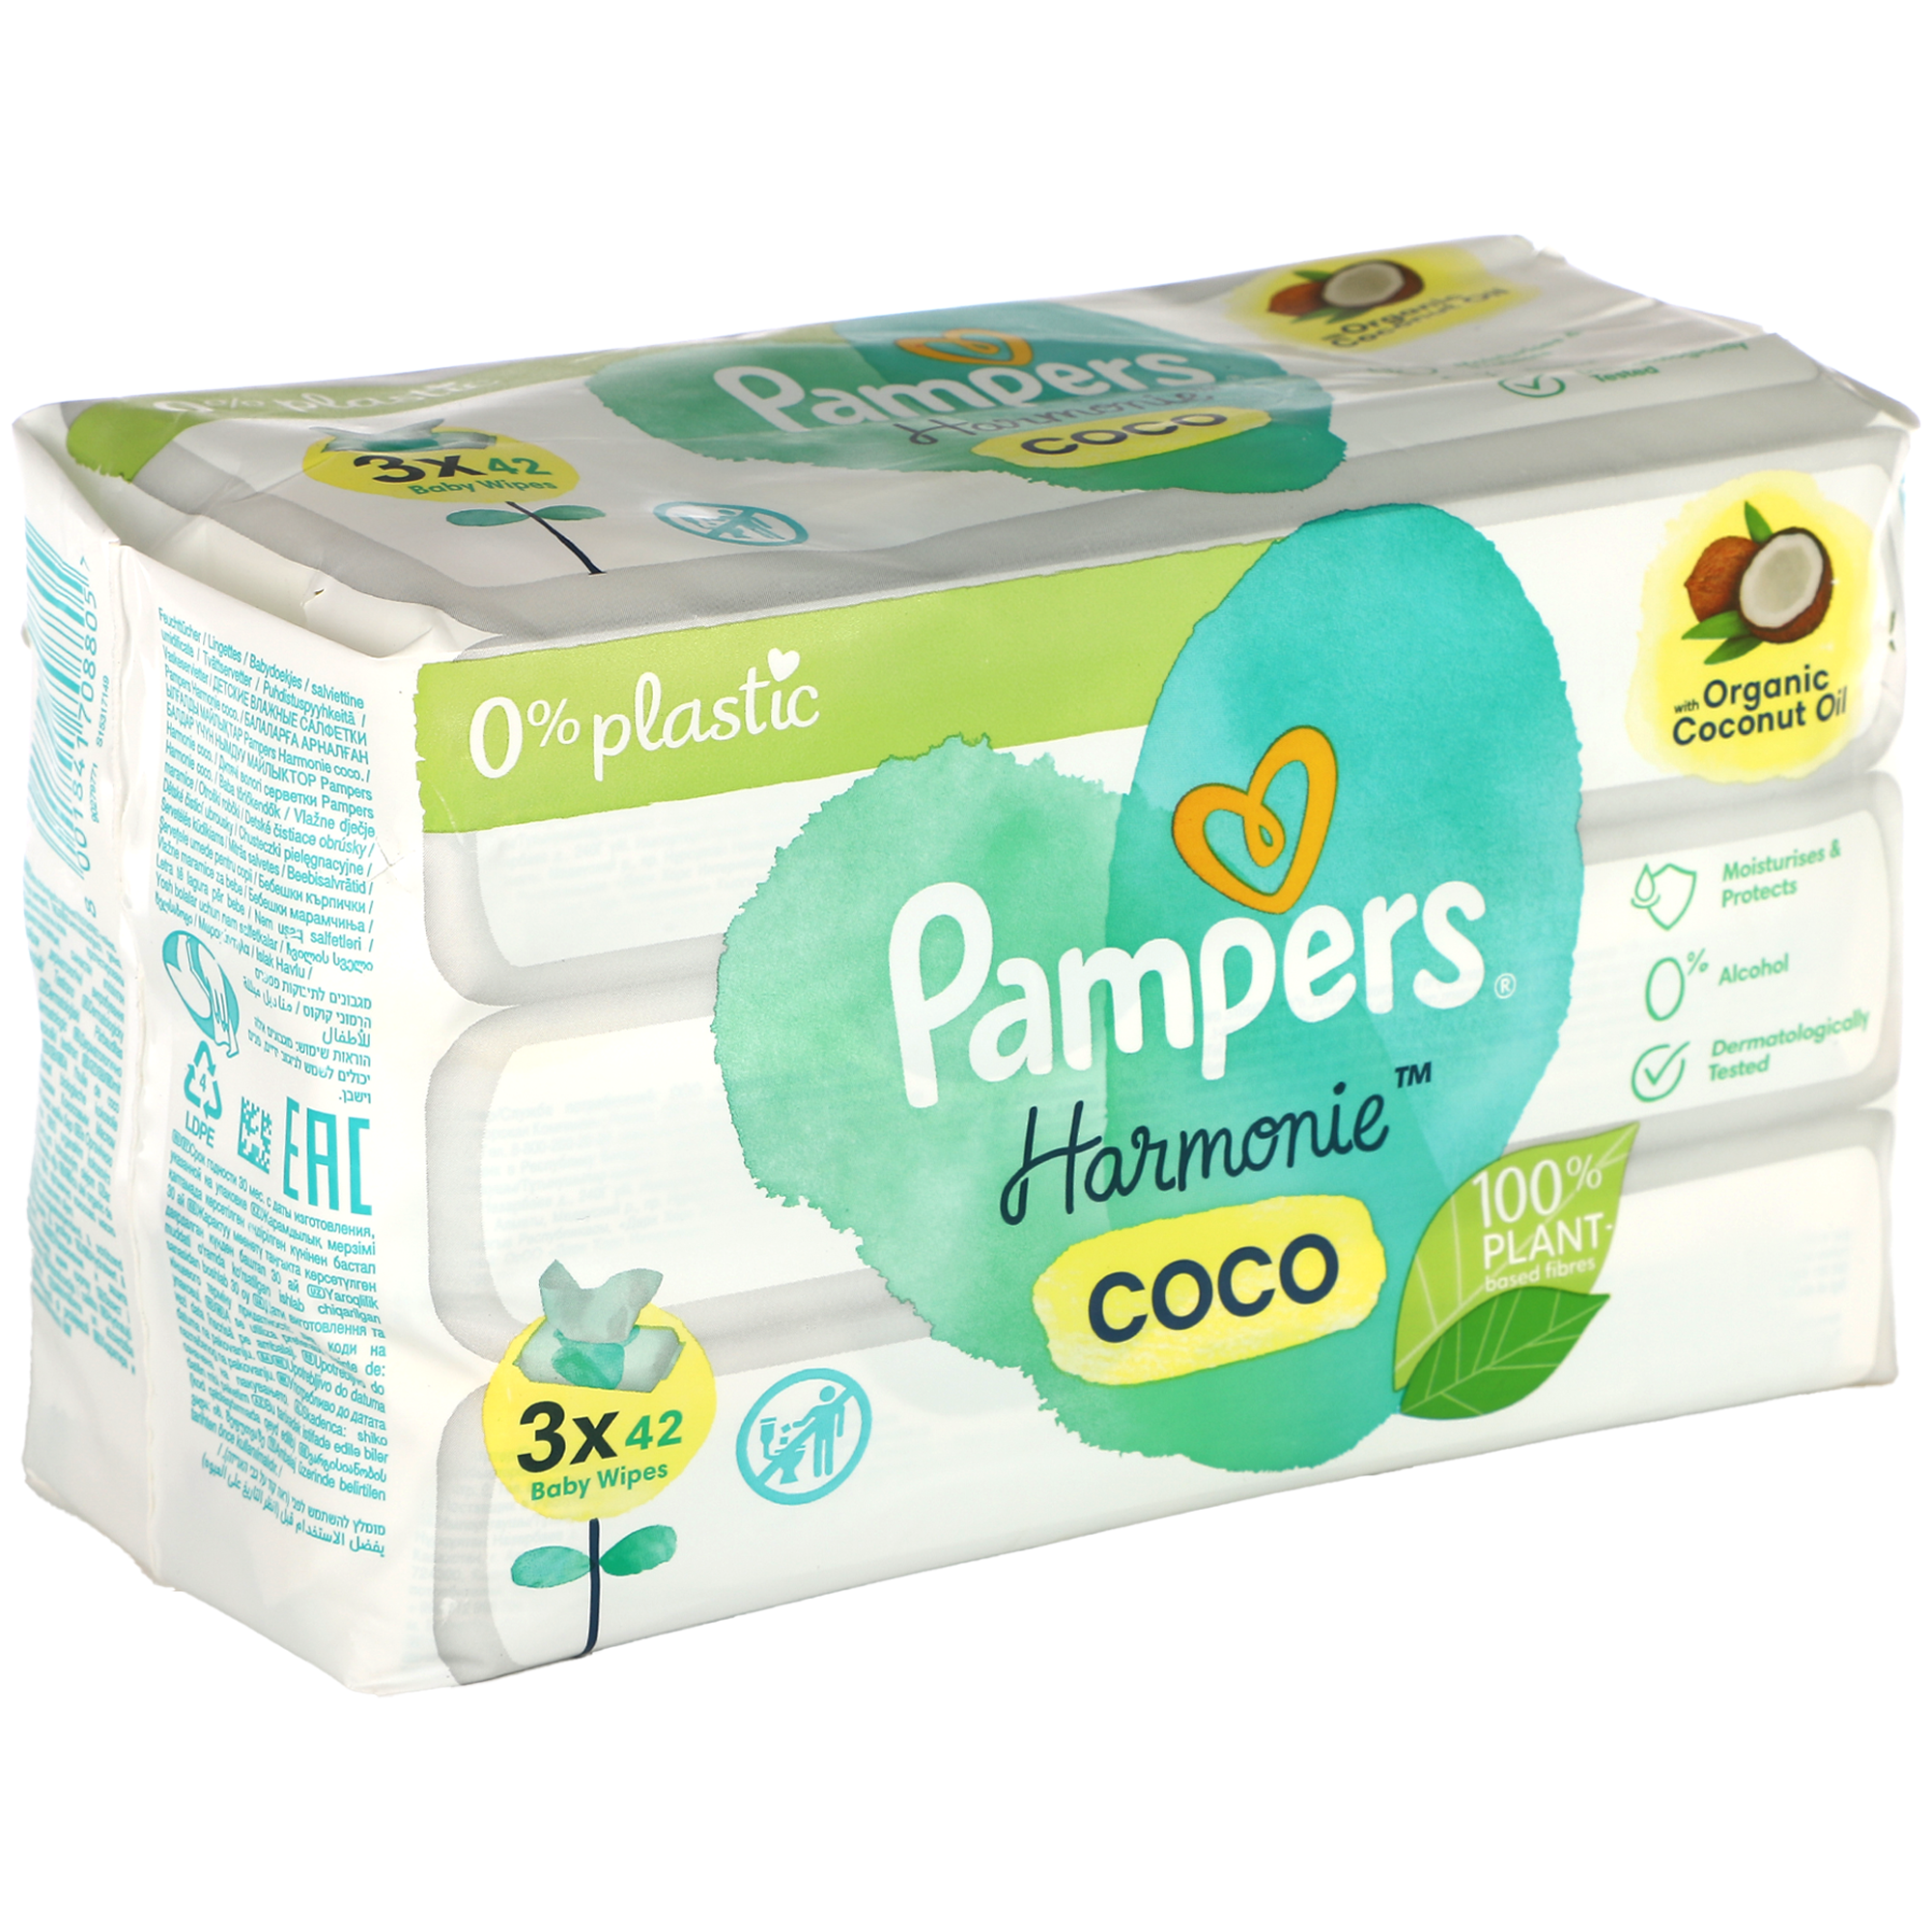 Pampers - 6x132 Lingettes Harmonie Coco, Pampers